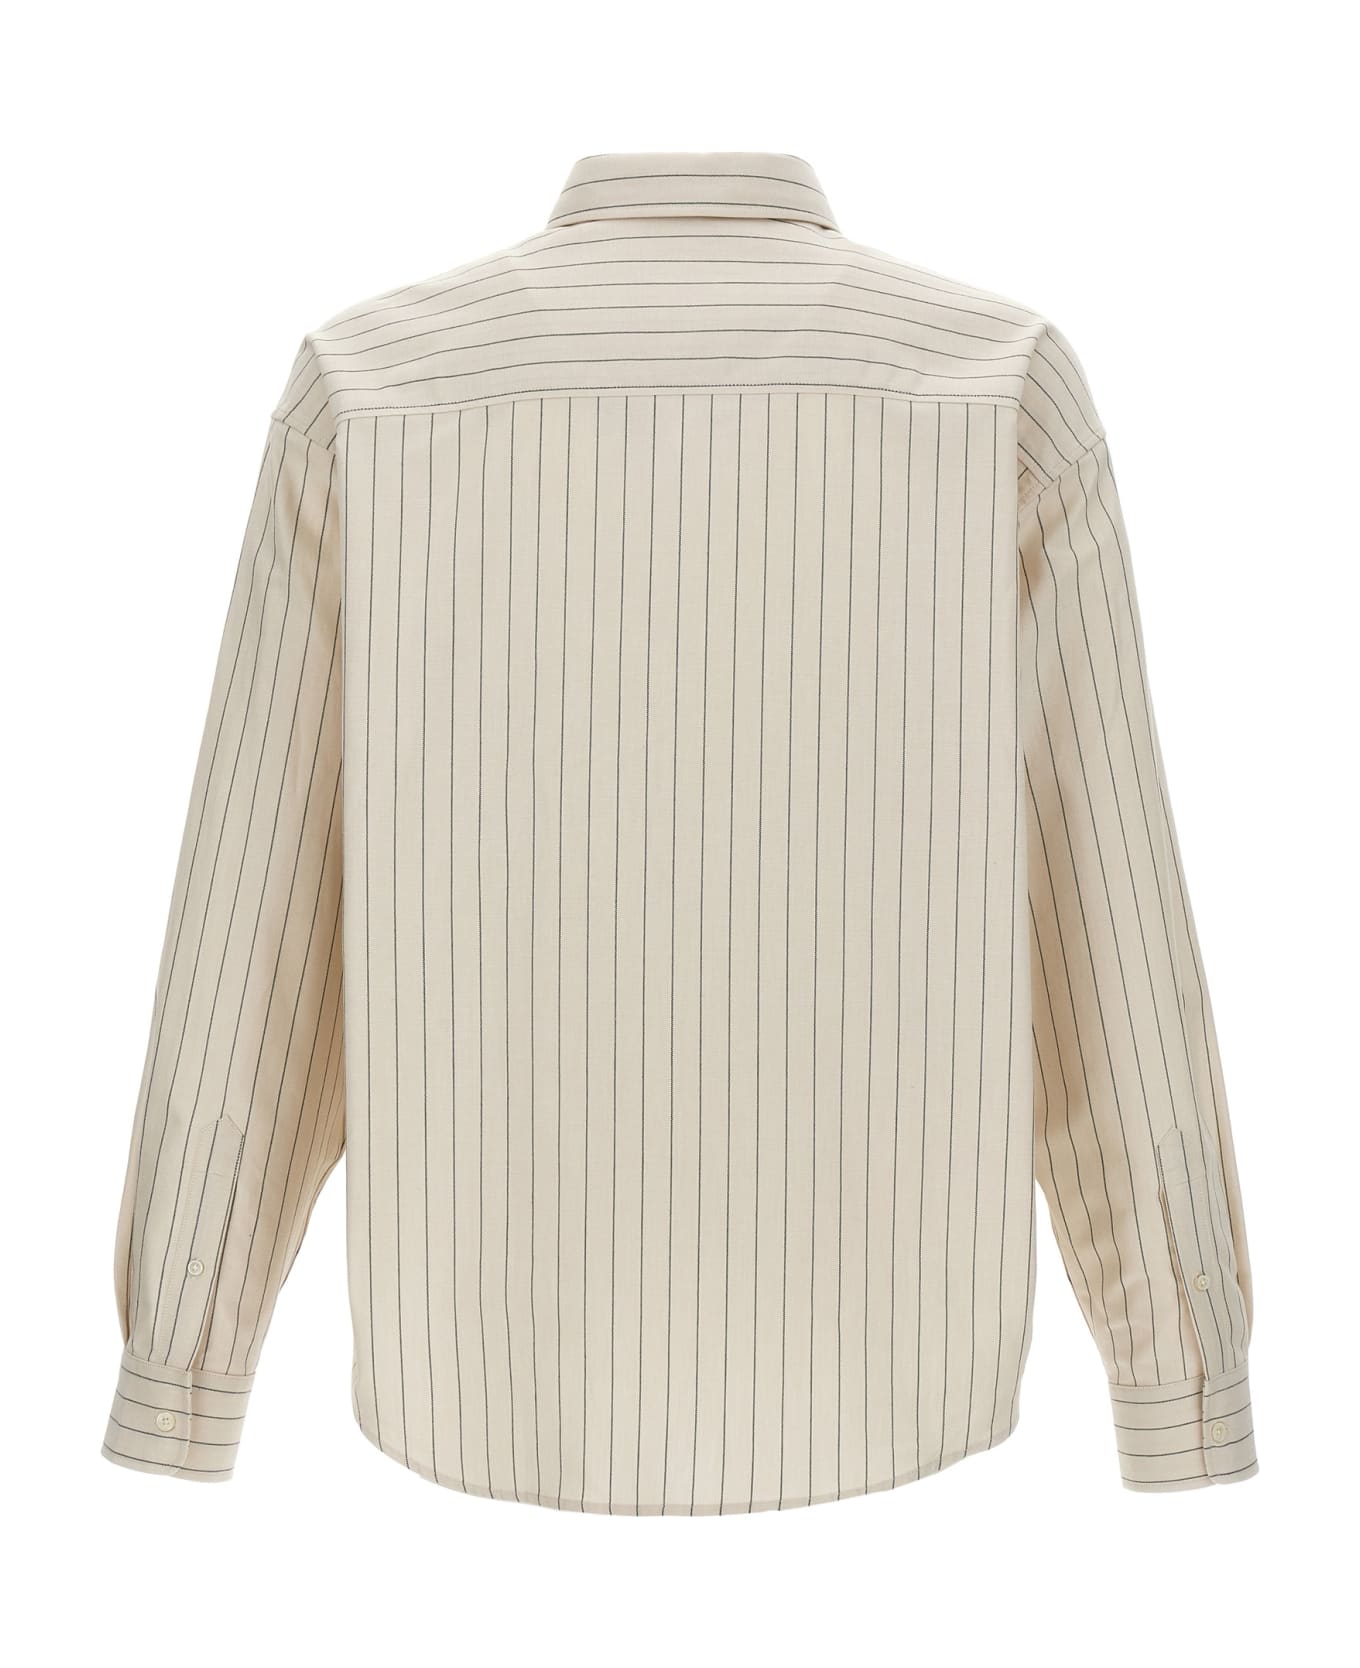 Ami Alexandre Mattiussi Logo Embroidery Striped Shirt - White/Black